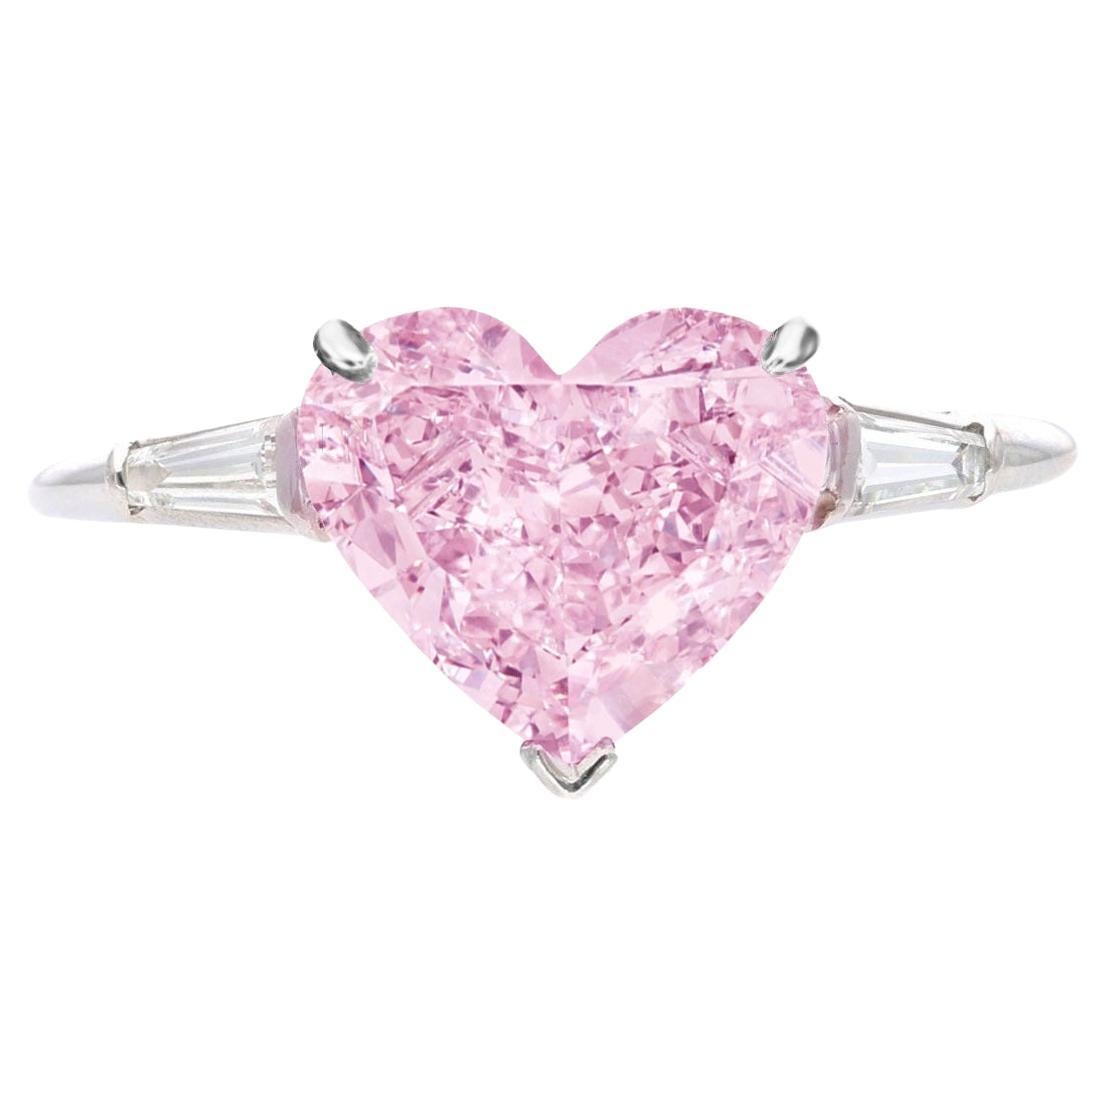 FLAWLESS GIA Certified 2.2 Carats Fancy Intense Pink Heart Shape Diamond Ring For Sale